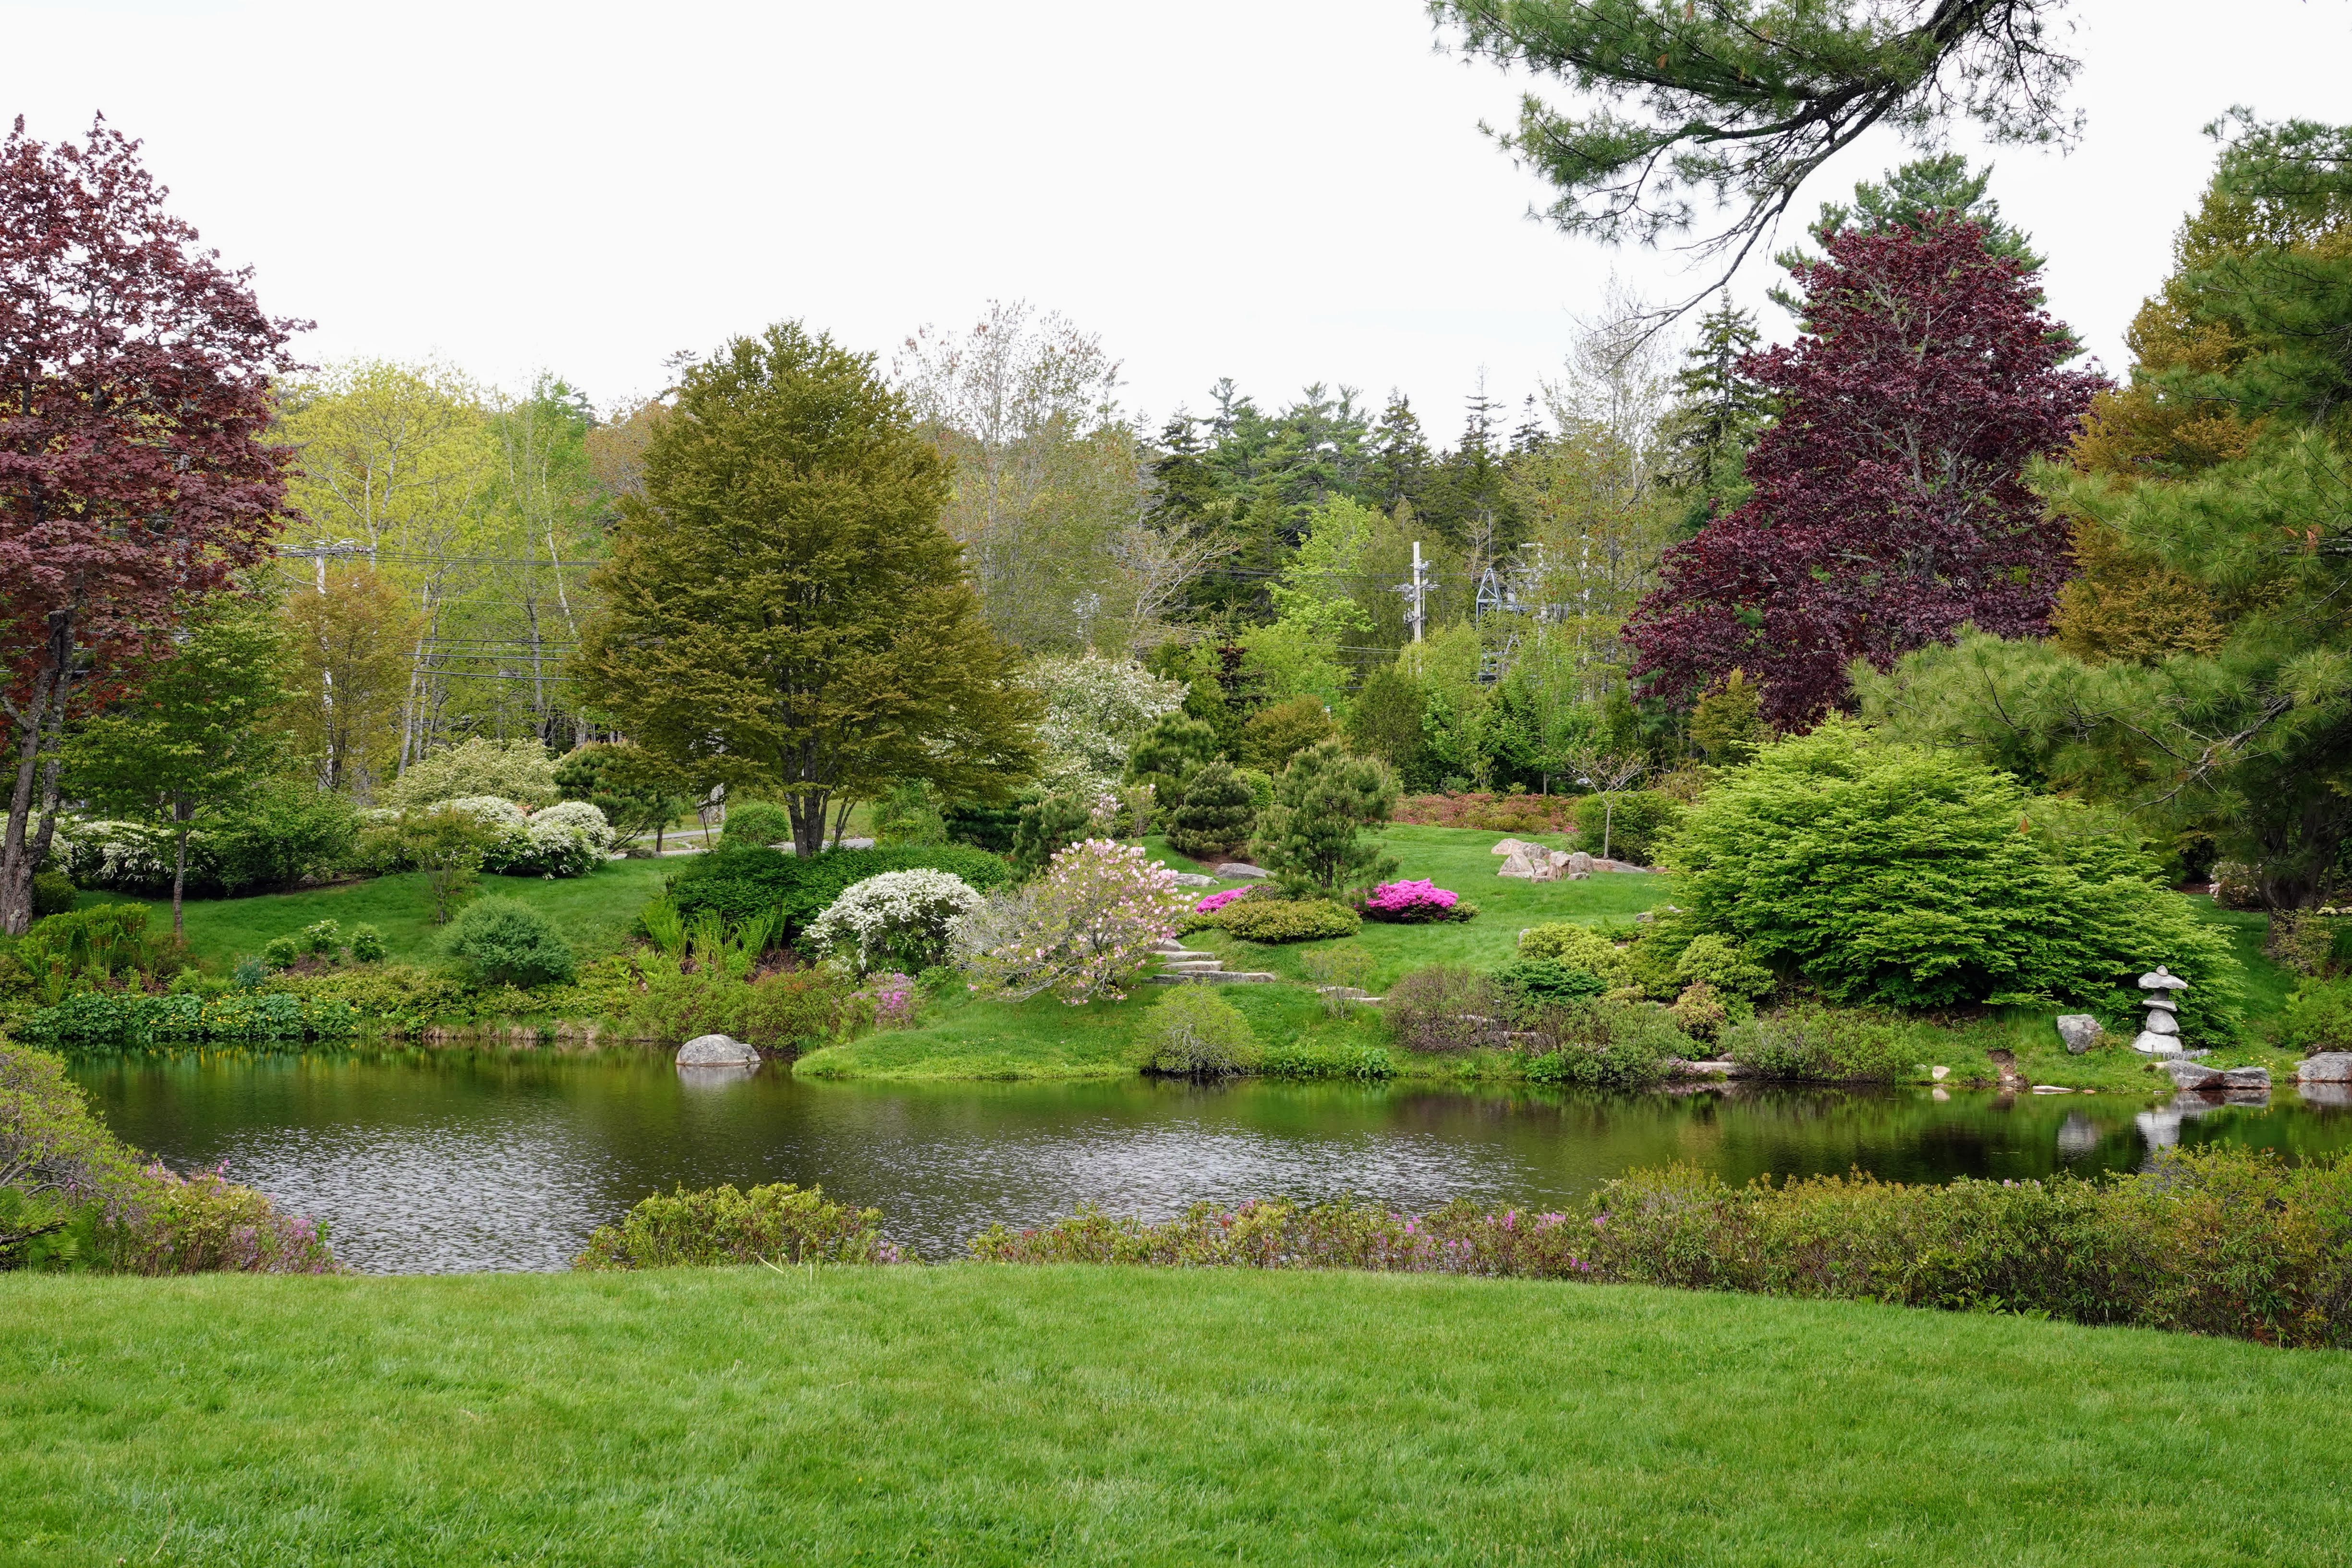 The Martha Stewart Blog Blog Archive Asticou Azalea Garden